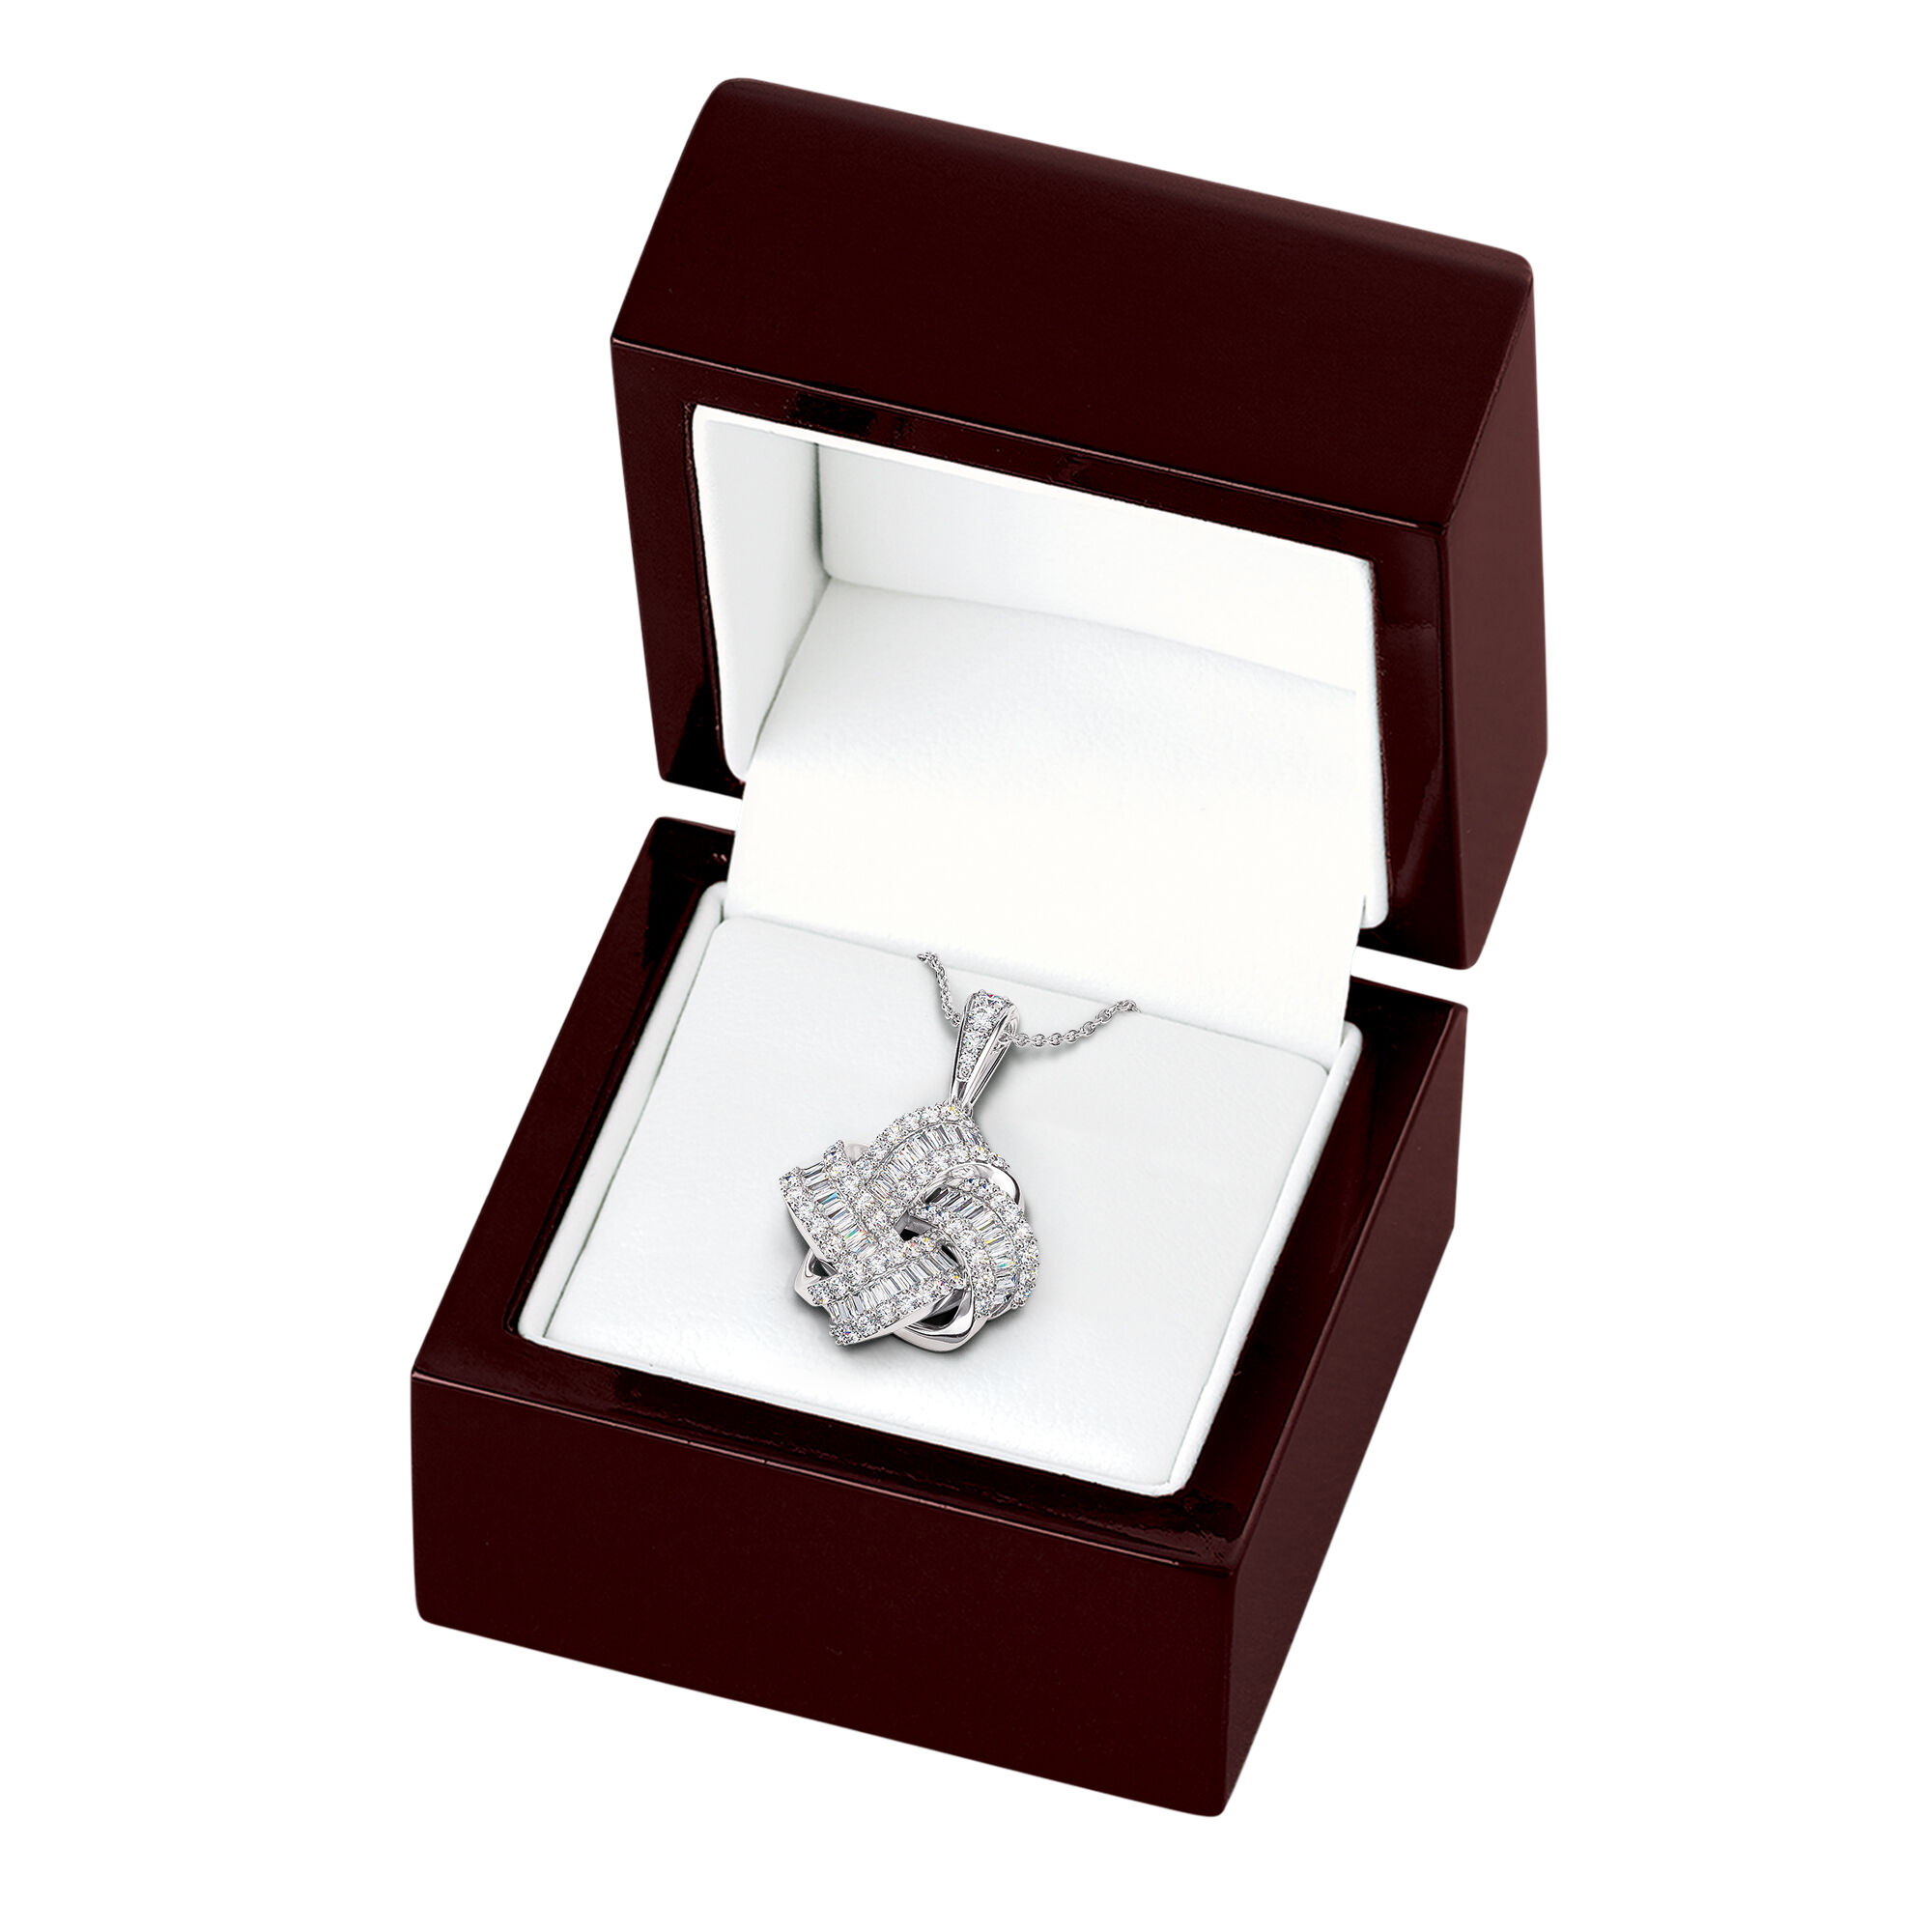 The Diamond Love Knot 11058 0016 b gift box